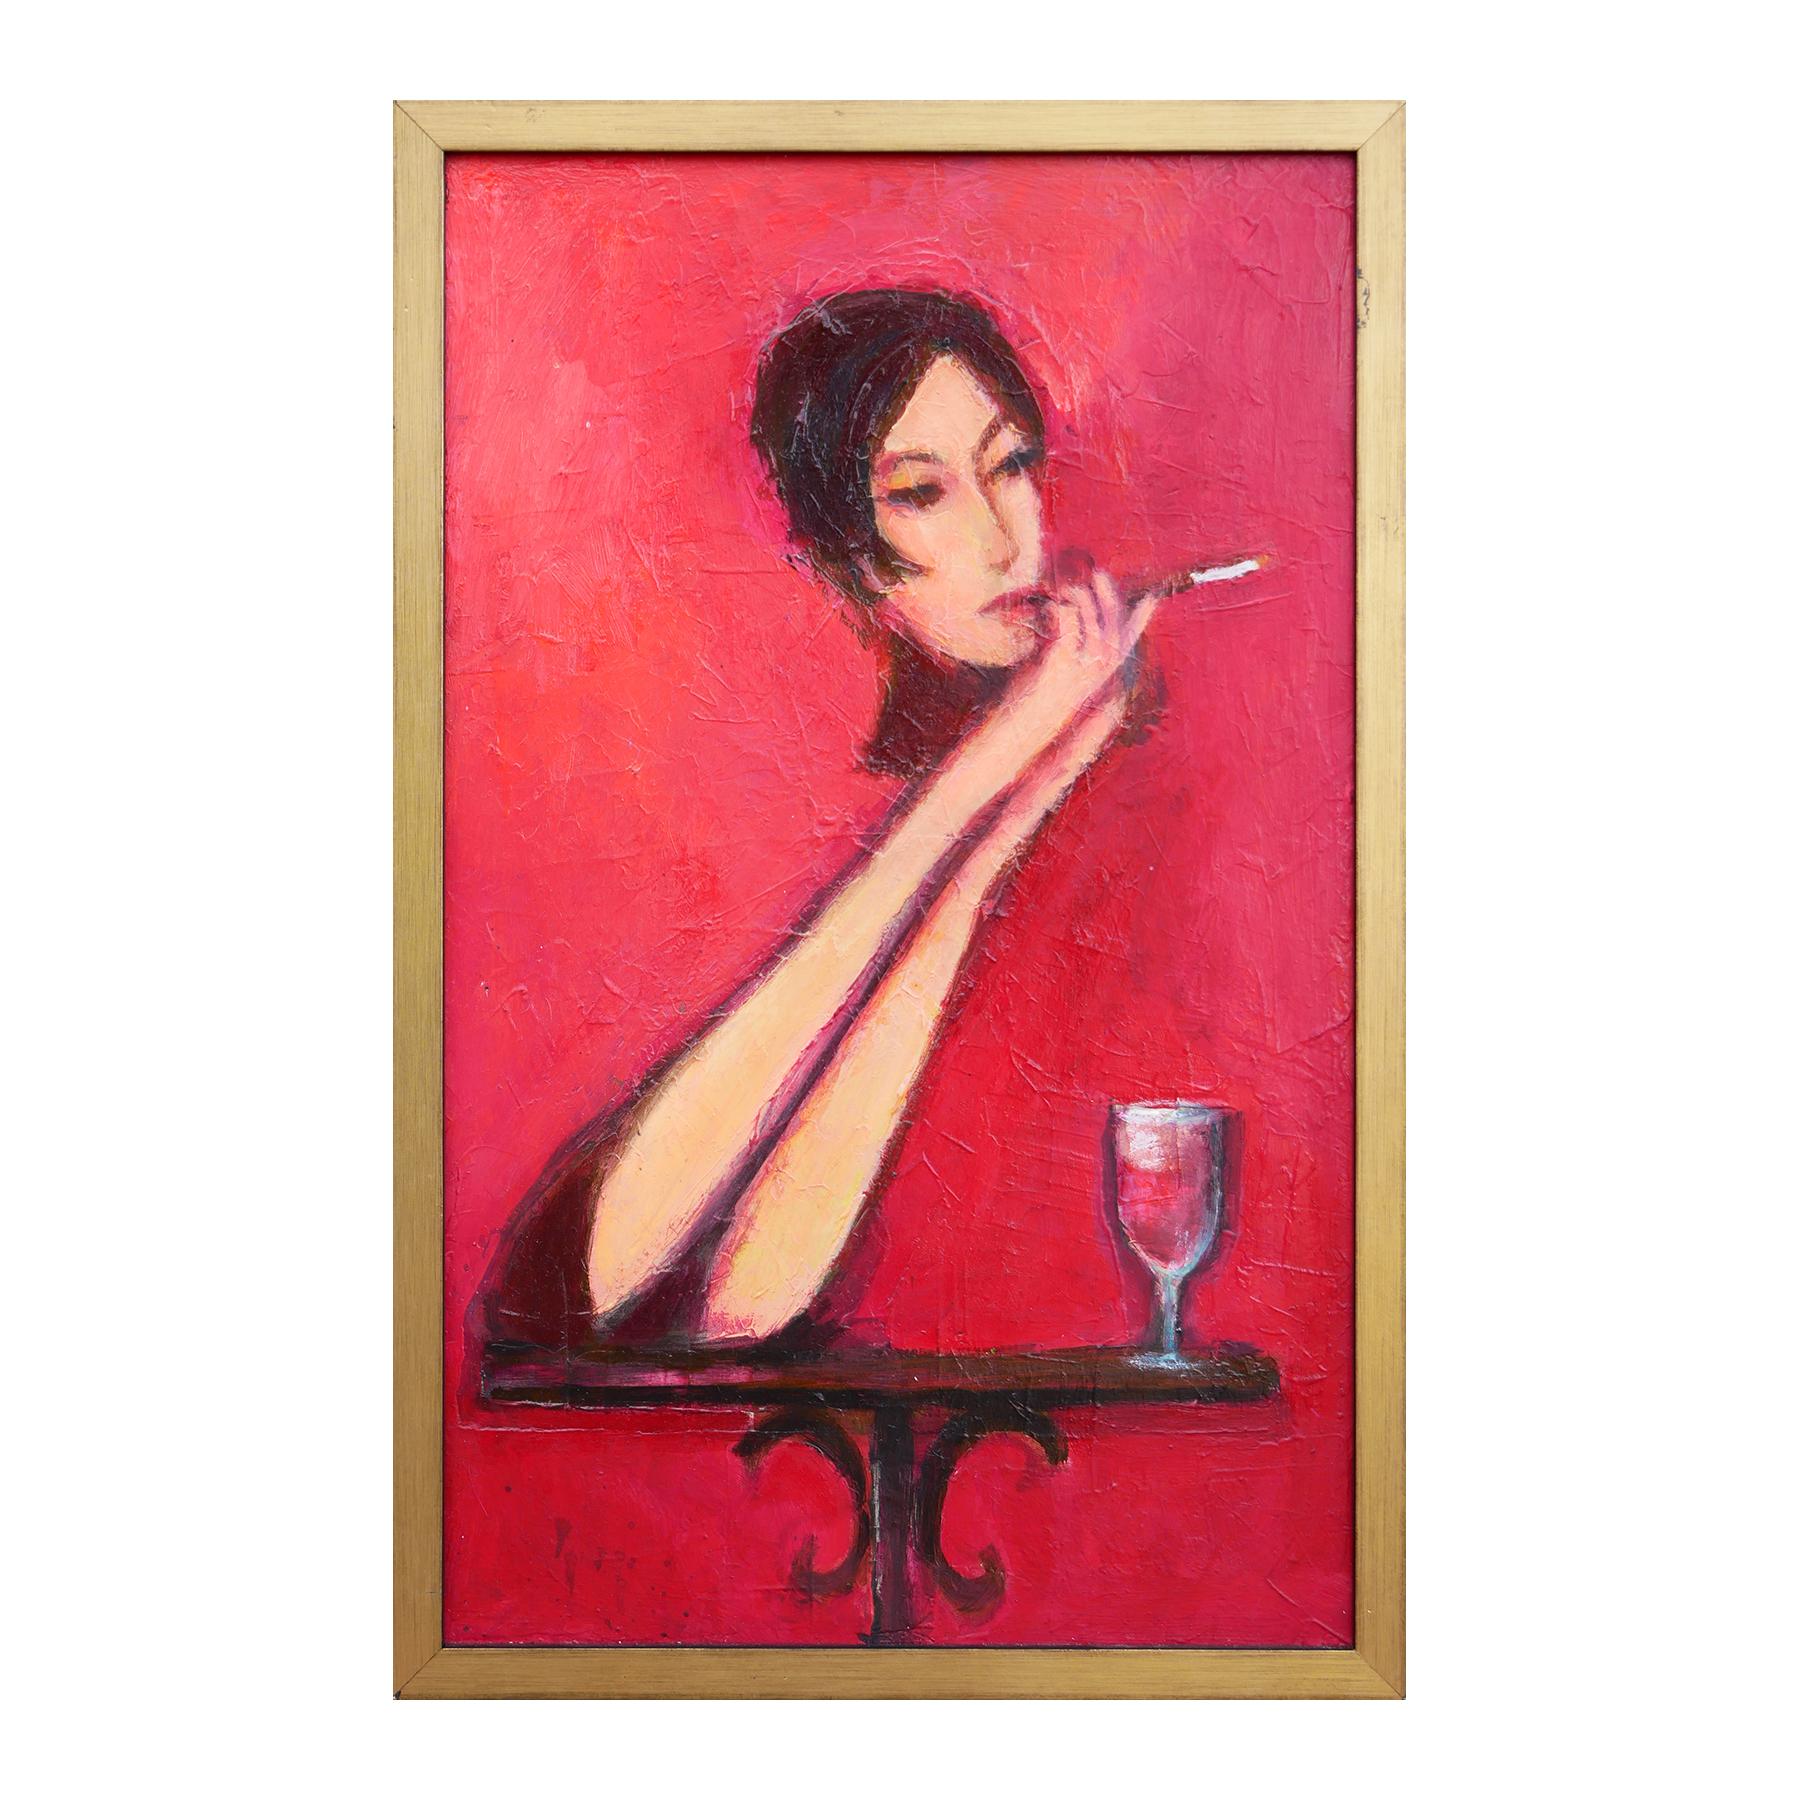 abstract art women in media cigarette